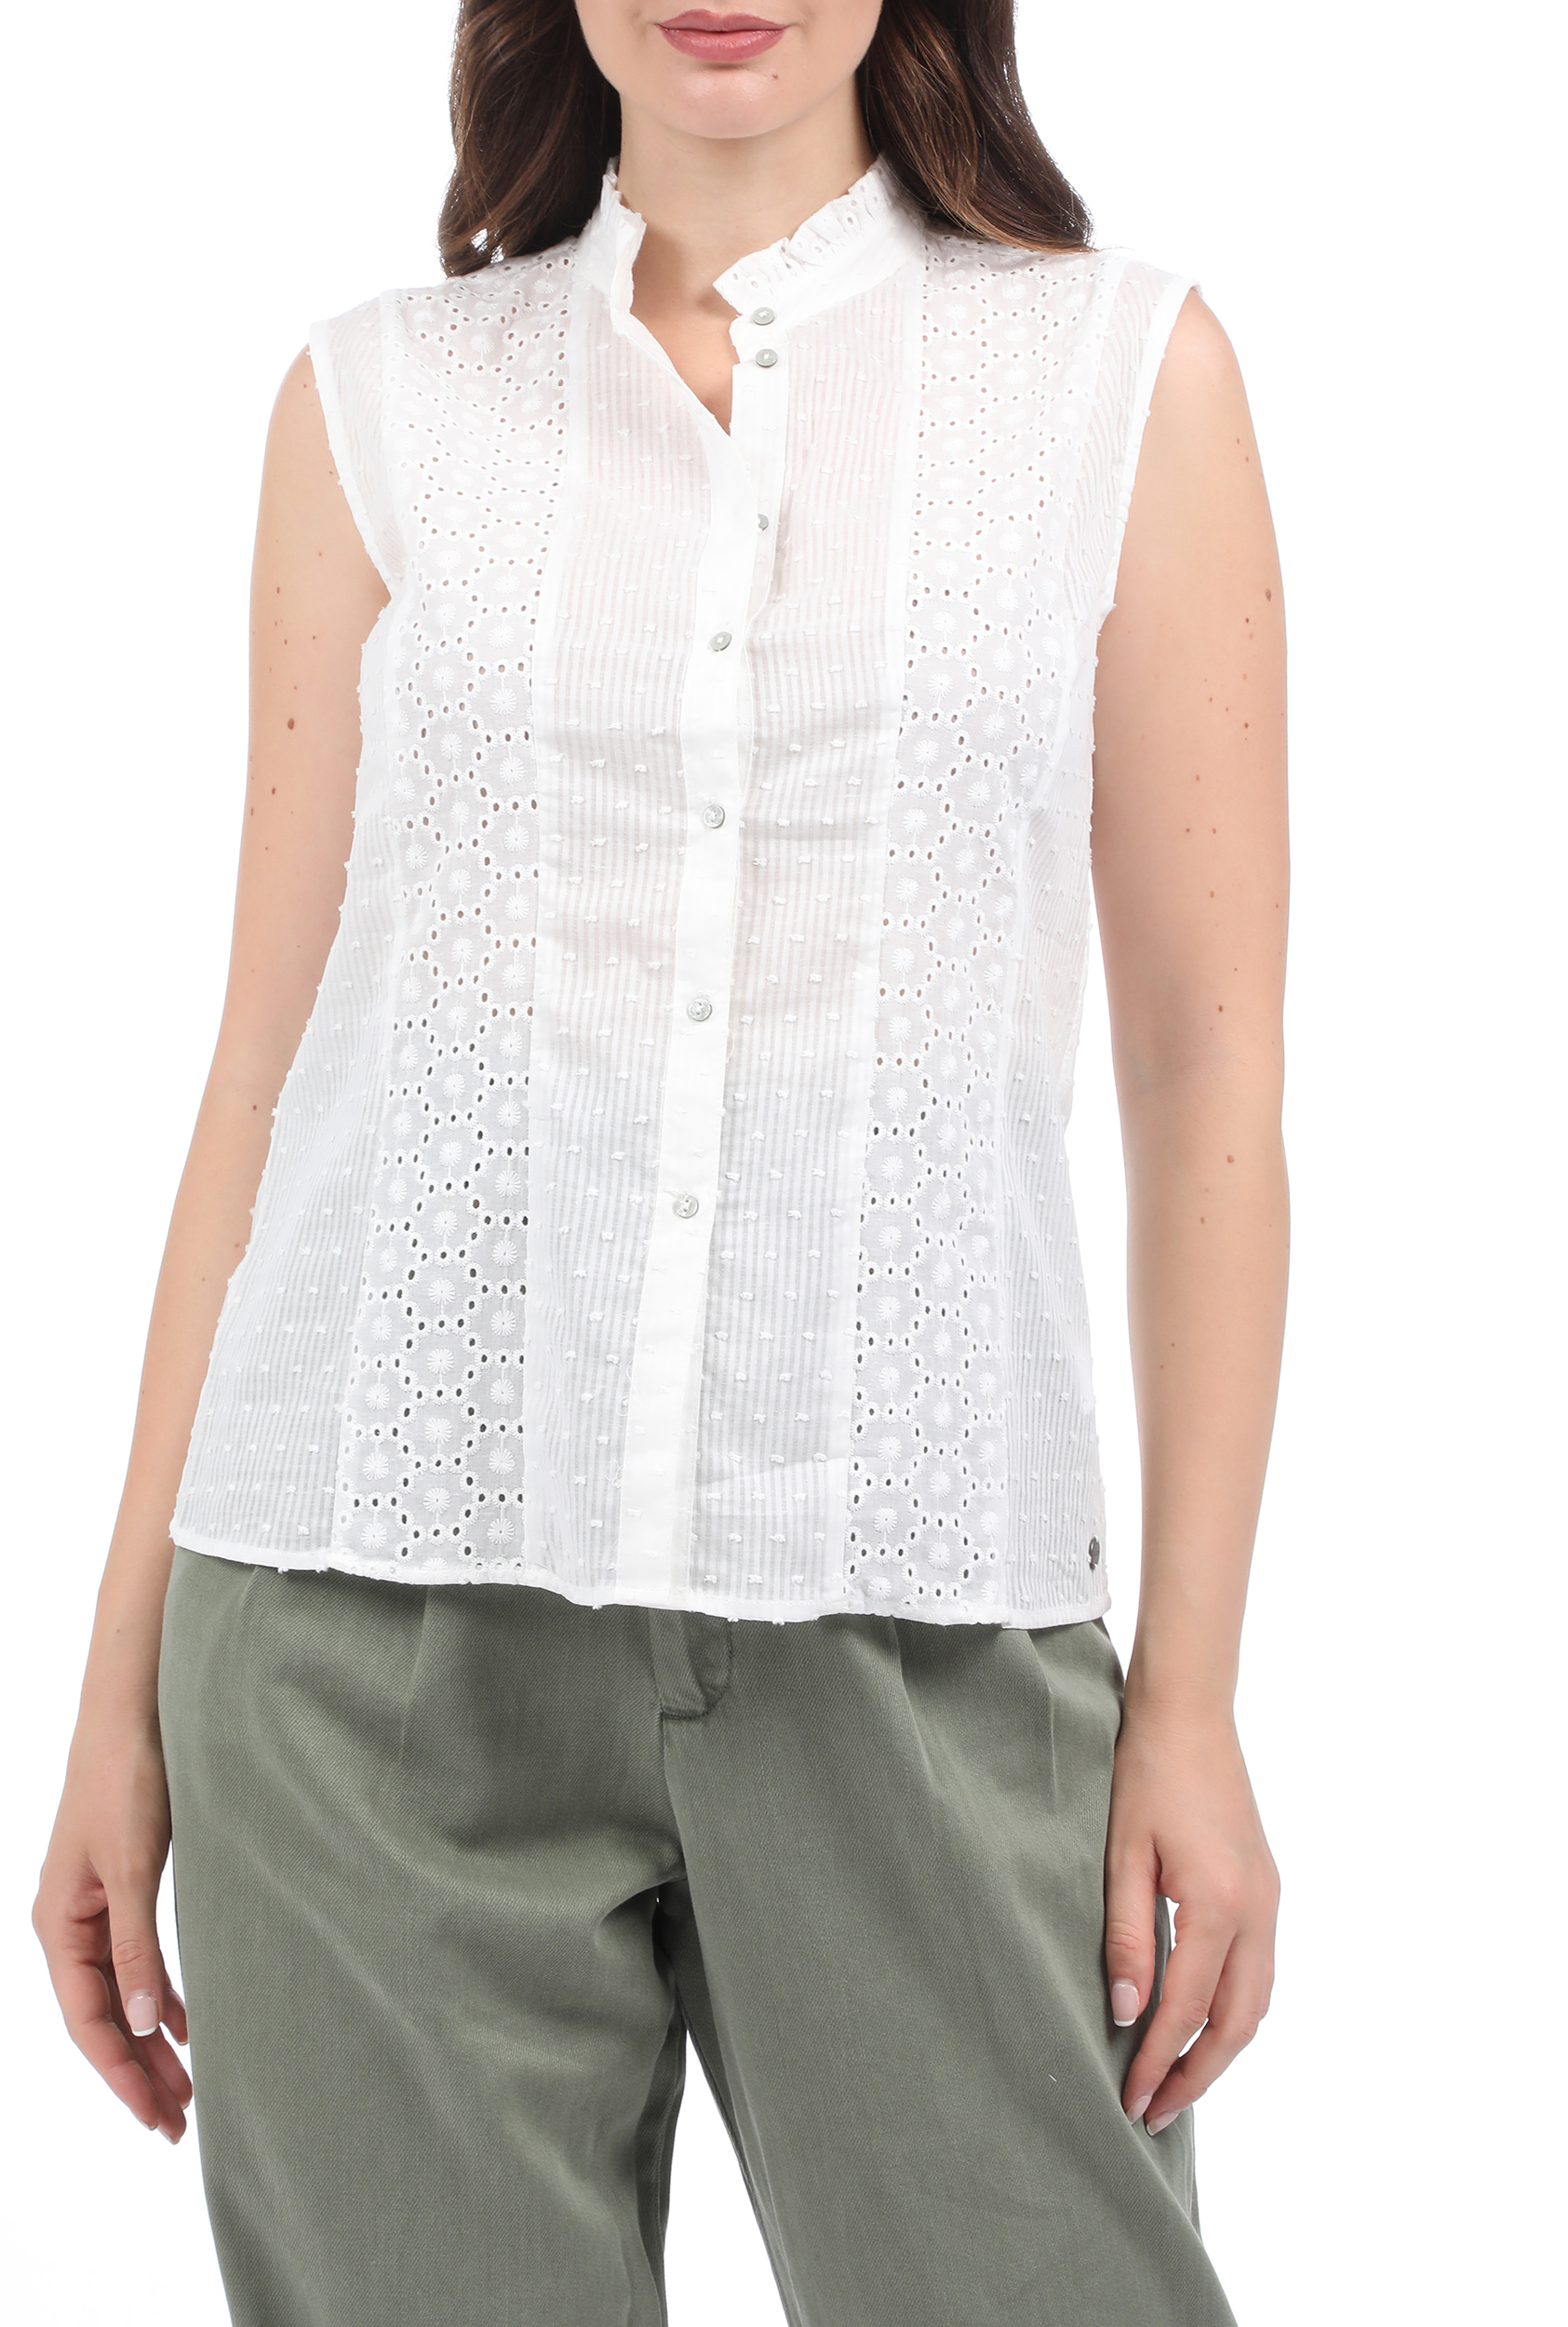 GARCIA JEANS – Γυναικείο πουκάμισο GARCIA JEANS λευκό 1811397.0-0090